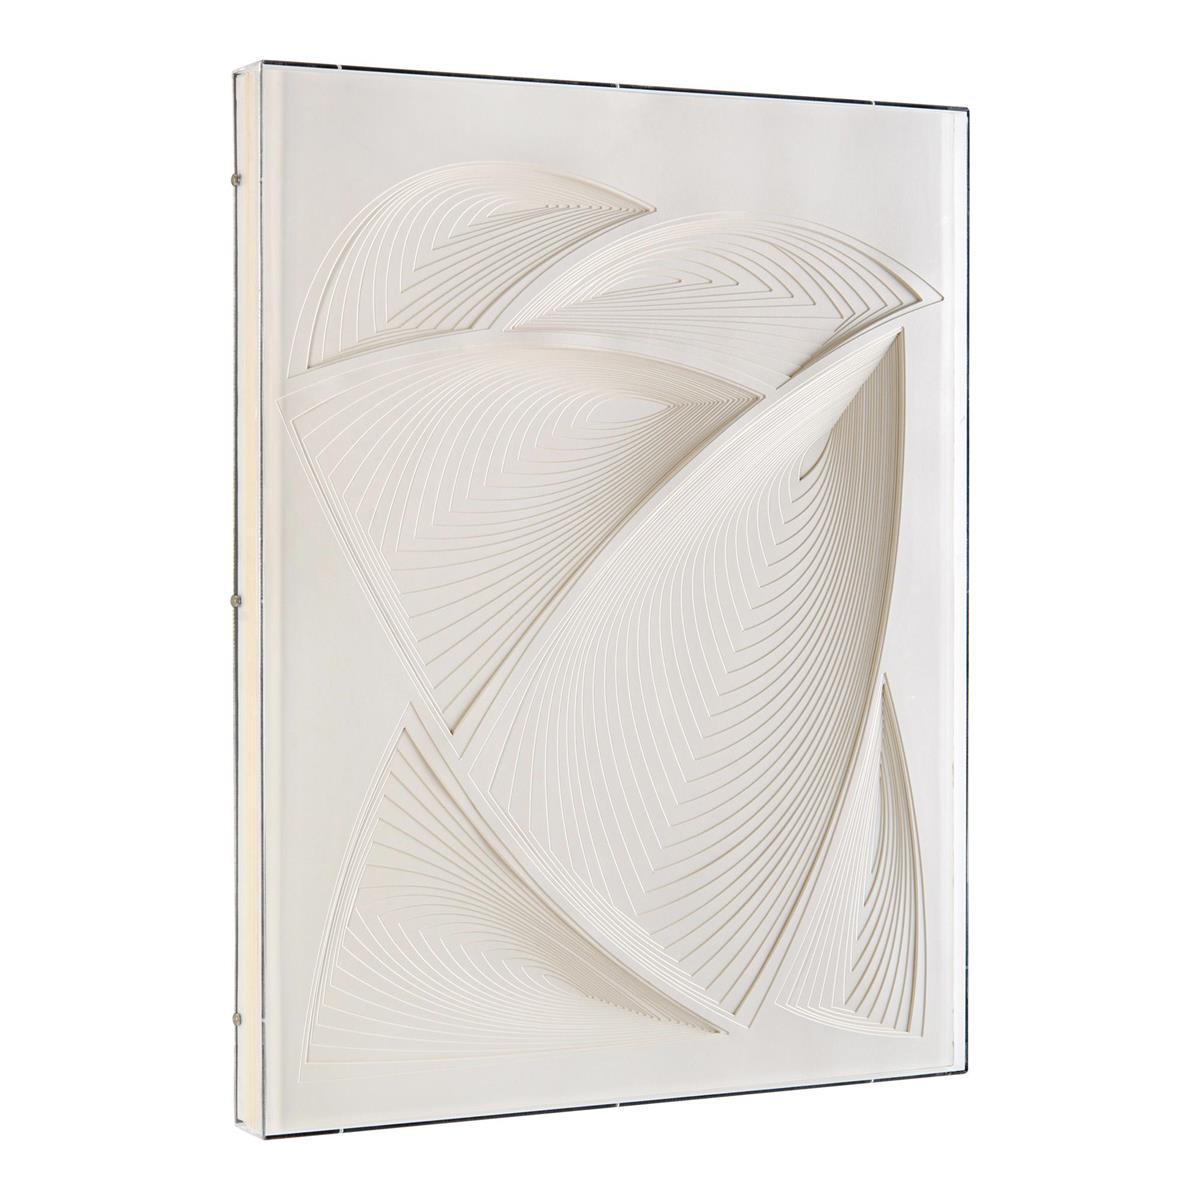 Tony Fey's White Aesthetic-John Richard-Art-Artistic Elements